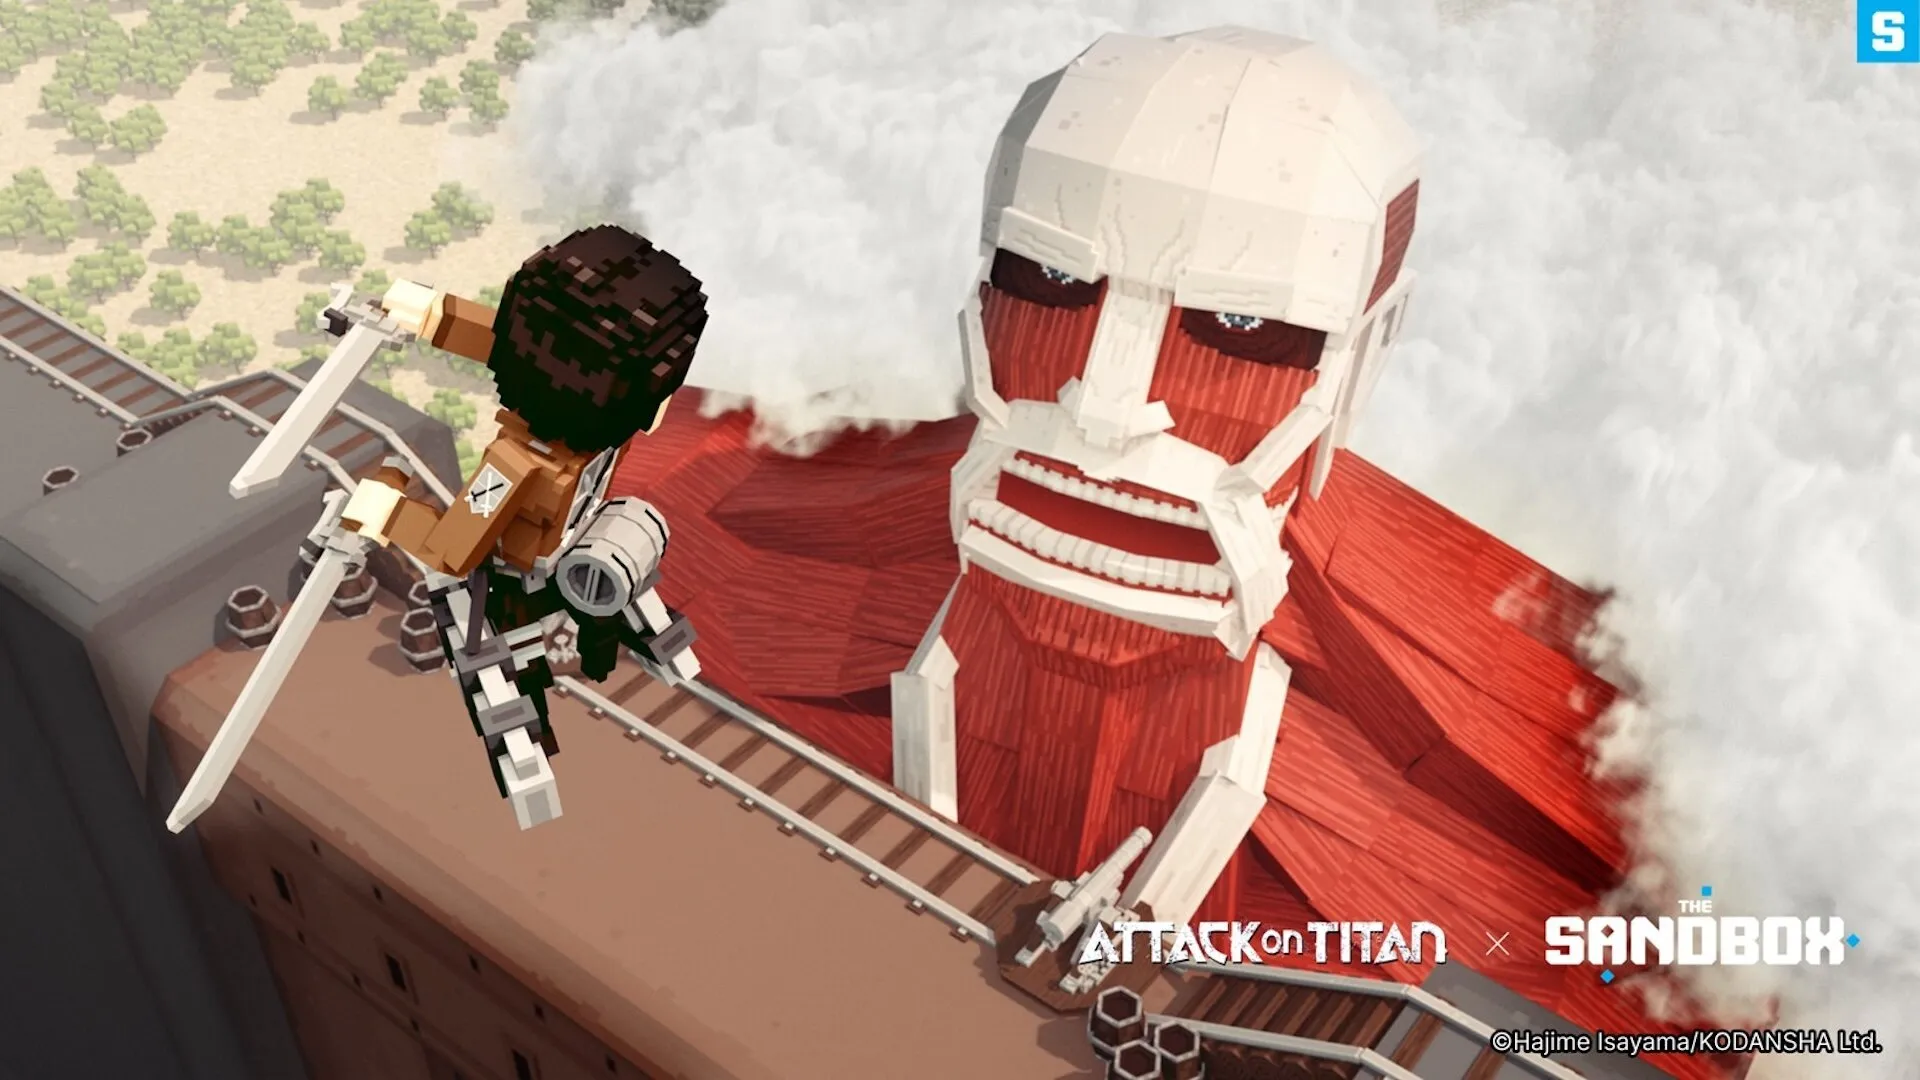 Attack on Titan in The Sandbox. Image: The Sandbox